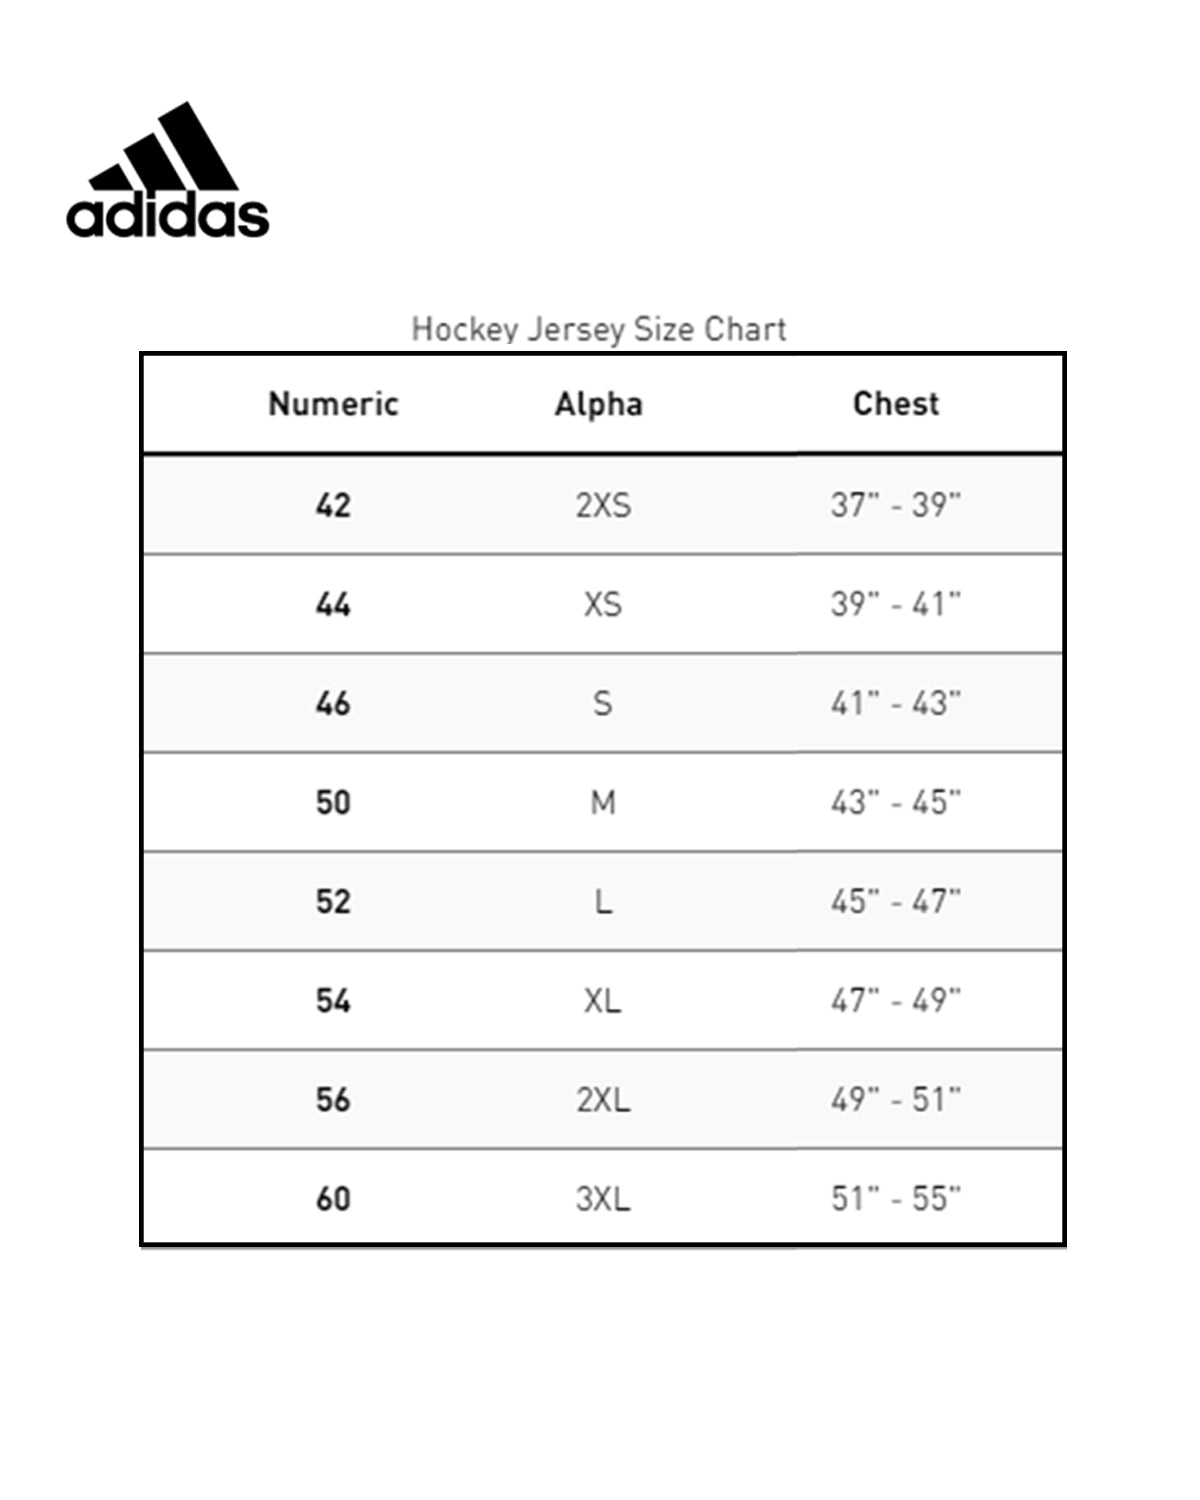 adidas Chicago Blackhawks Toews #19 Mens Alternate Jersey, Size 50/Medium  (NO TAGS)